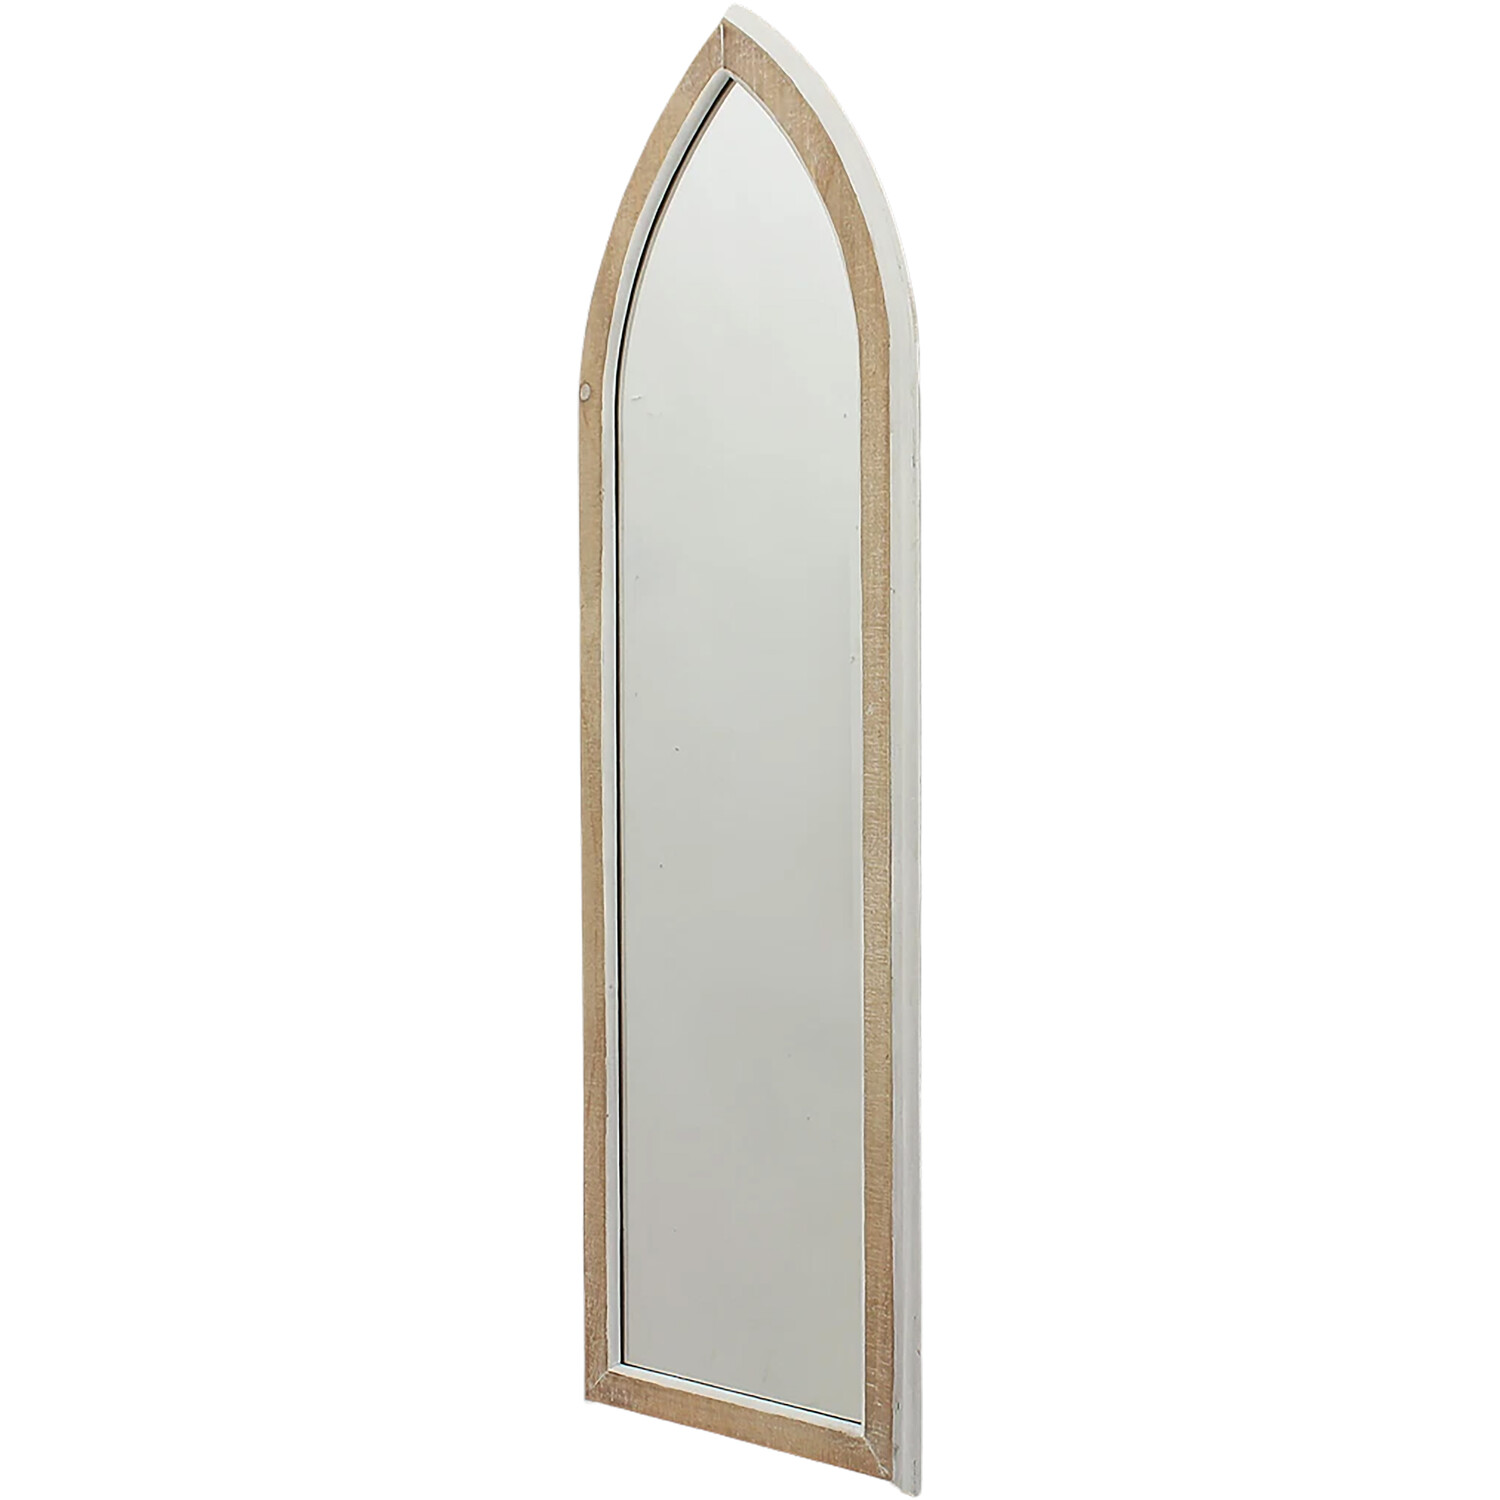 Narrow Arch Wooden Mirror - Brown Image 3